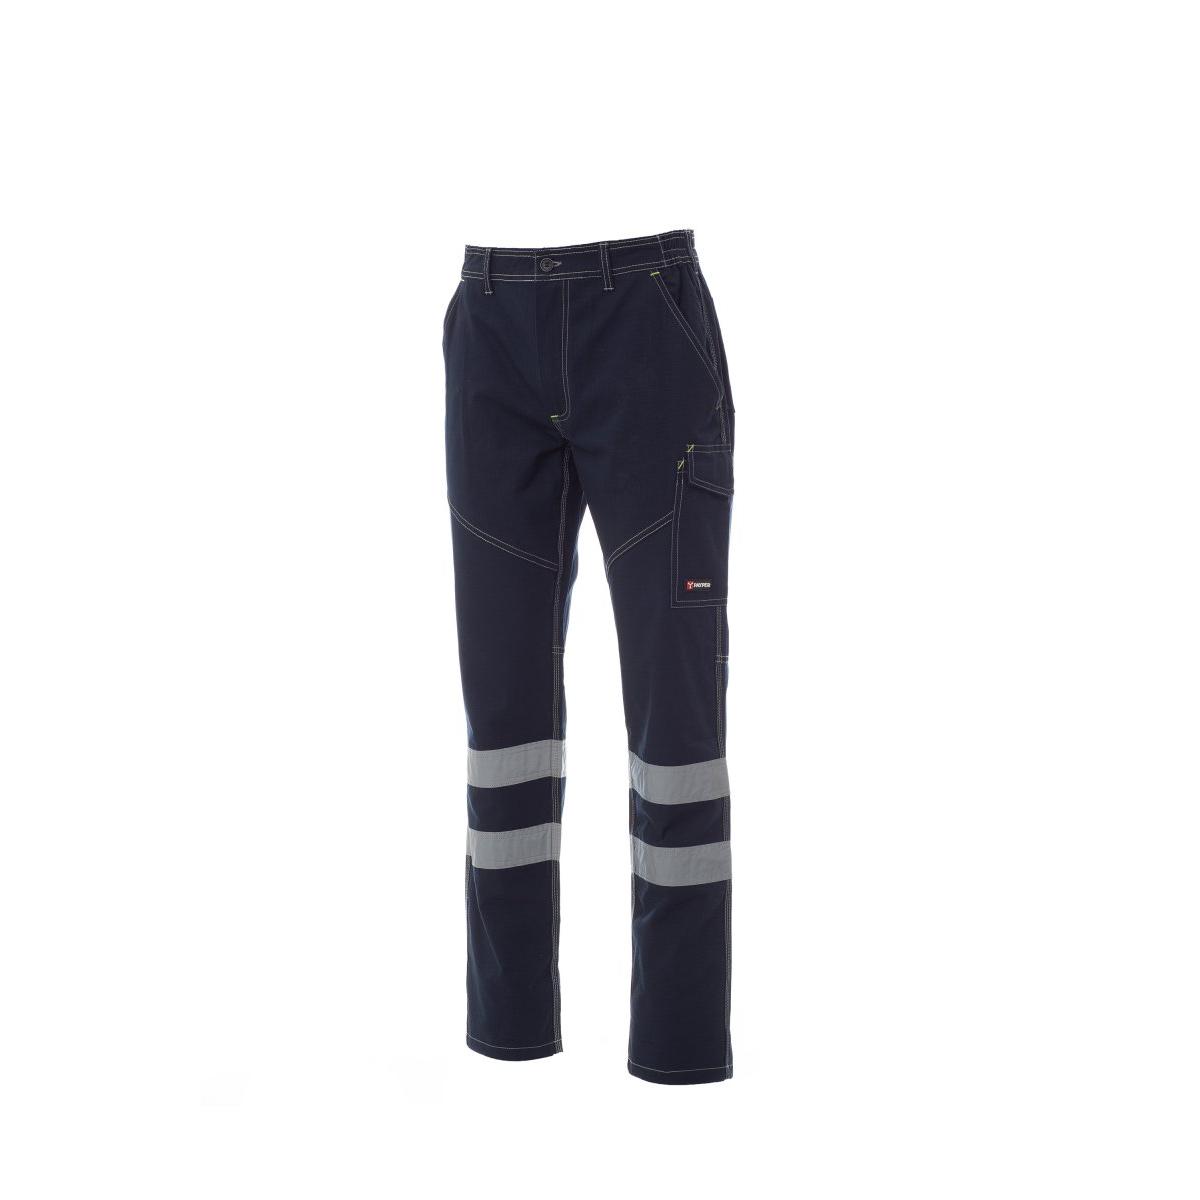 Pantaloni Payper 001709 Worker Summer Reflex, elasticizzati